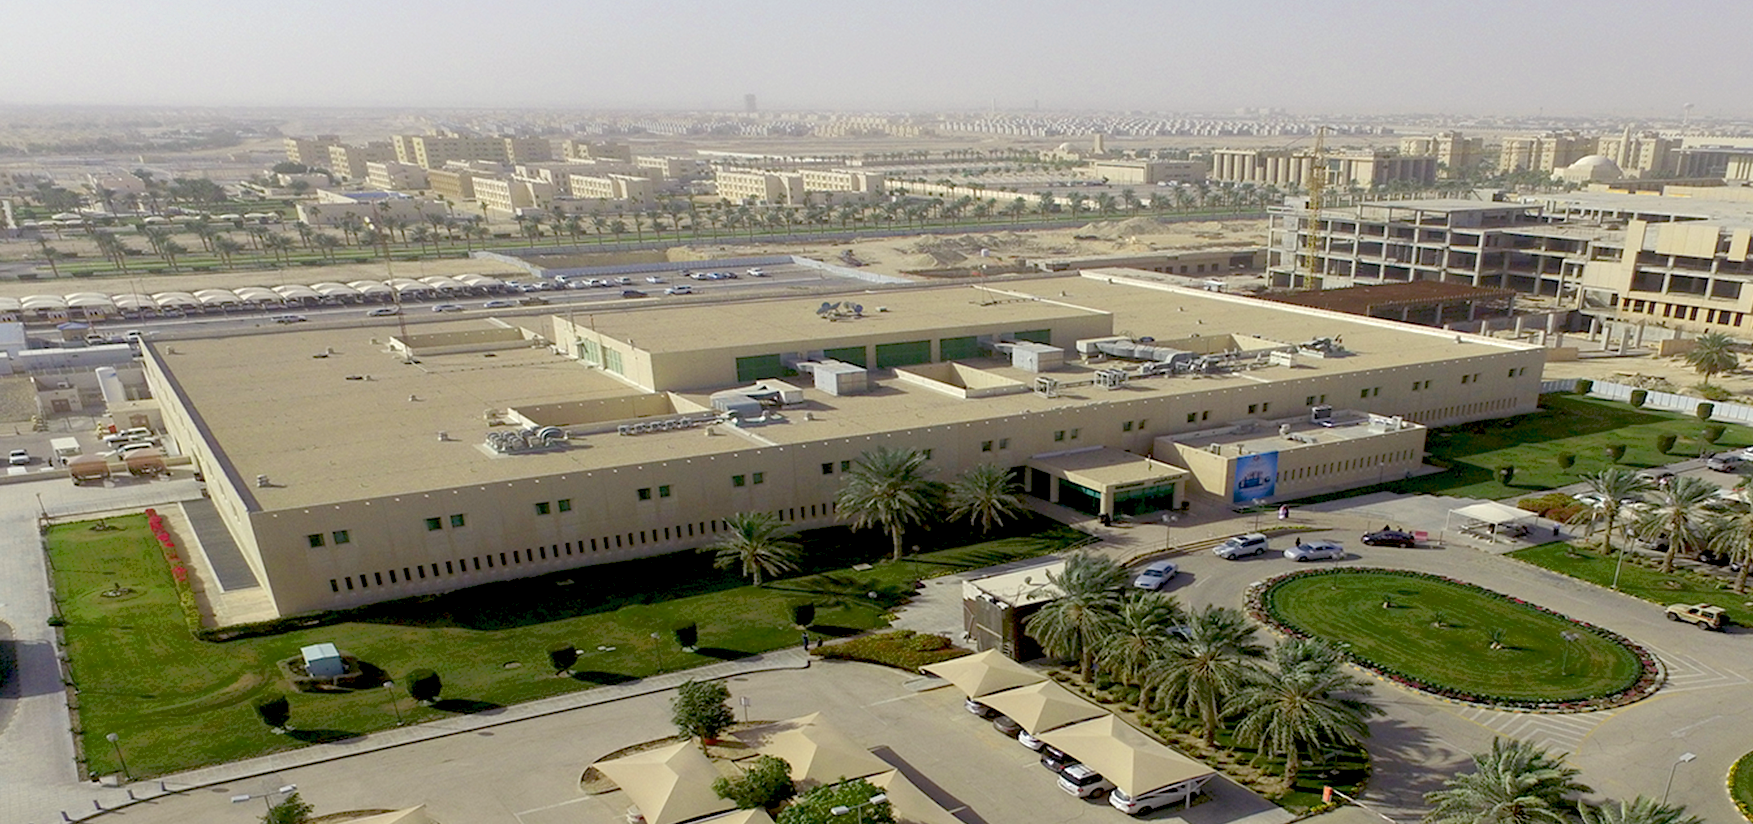 King Abdulaziz Hospital in Al Ahsa